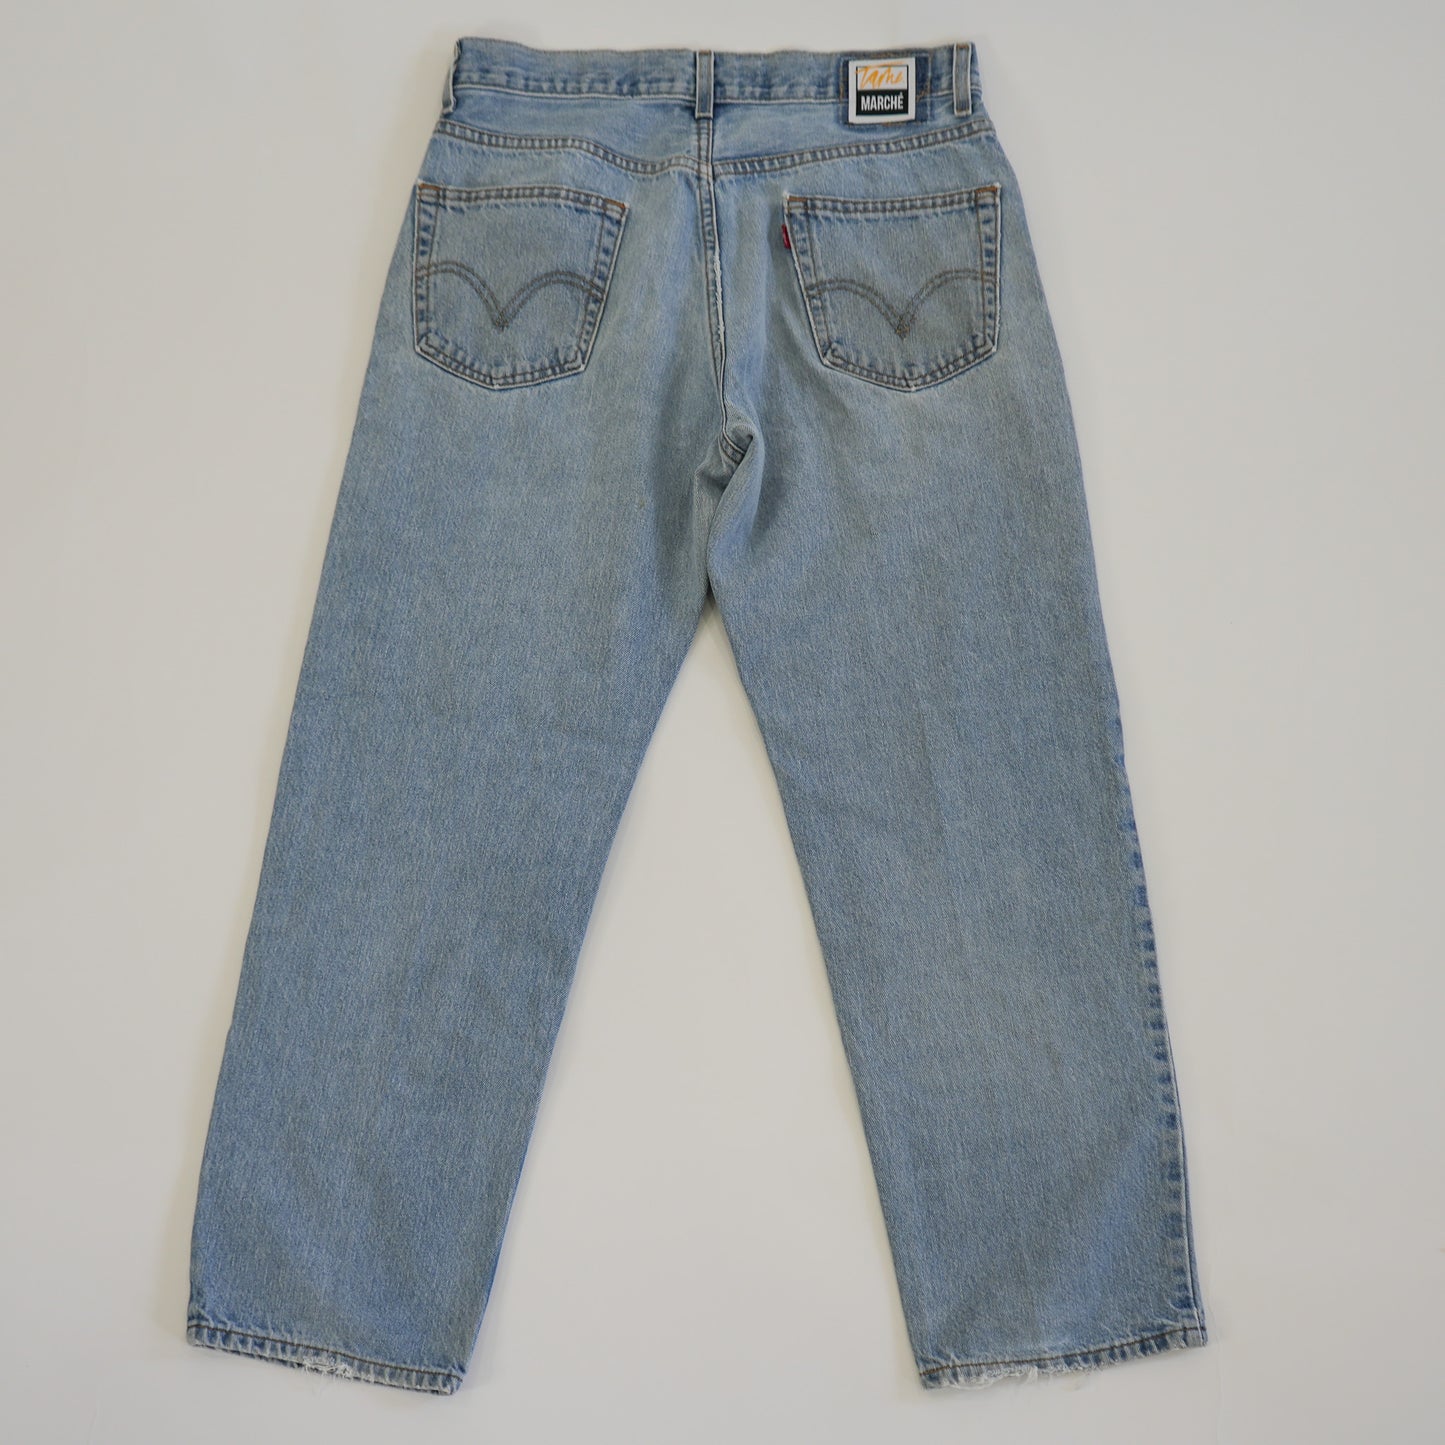 Brocade & Denim Patchwork Jeans (W 42)